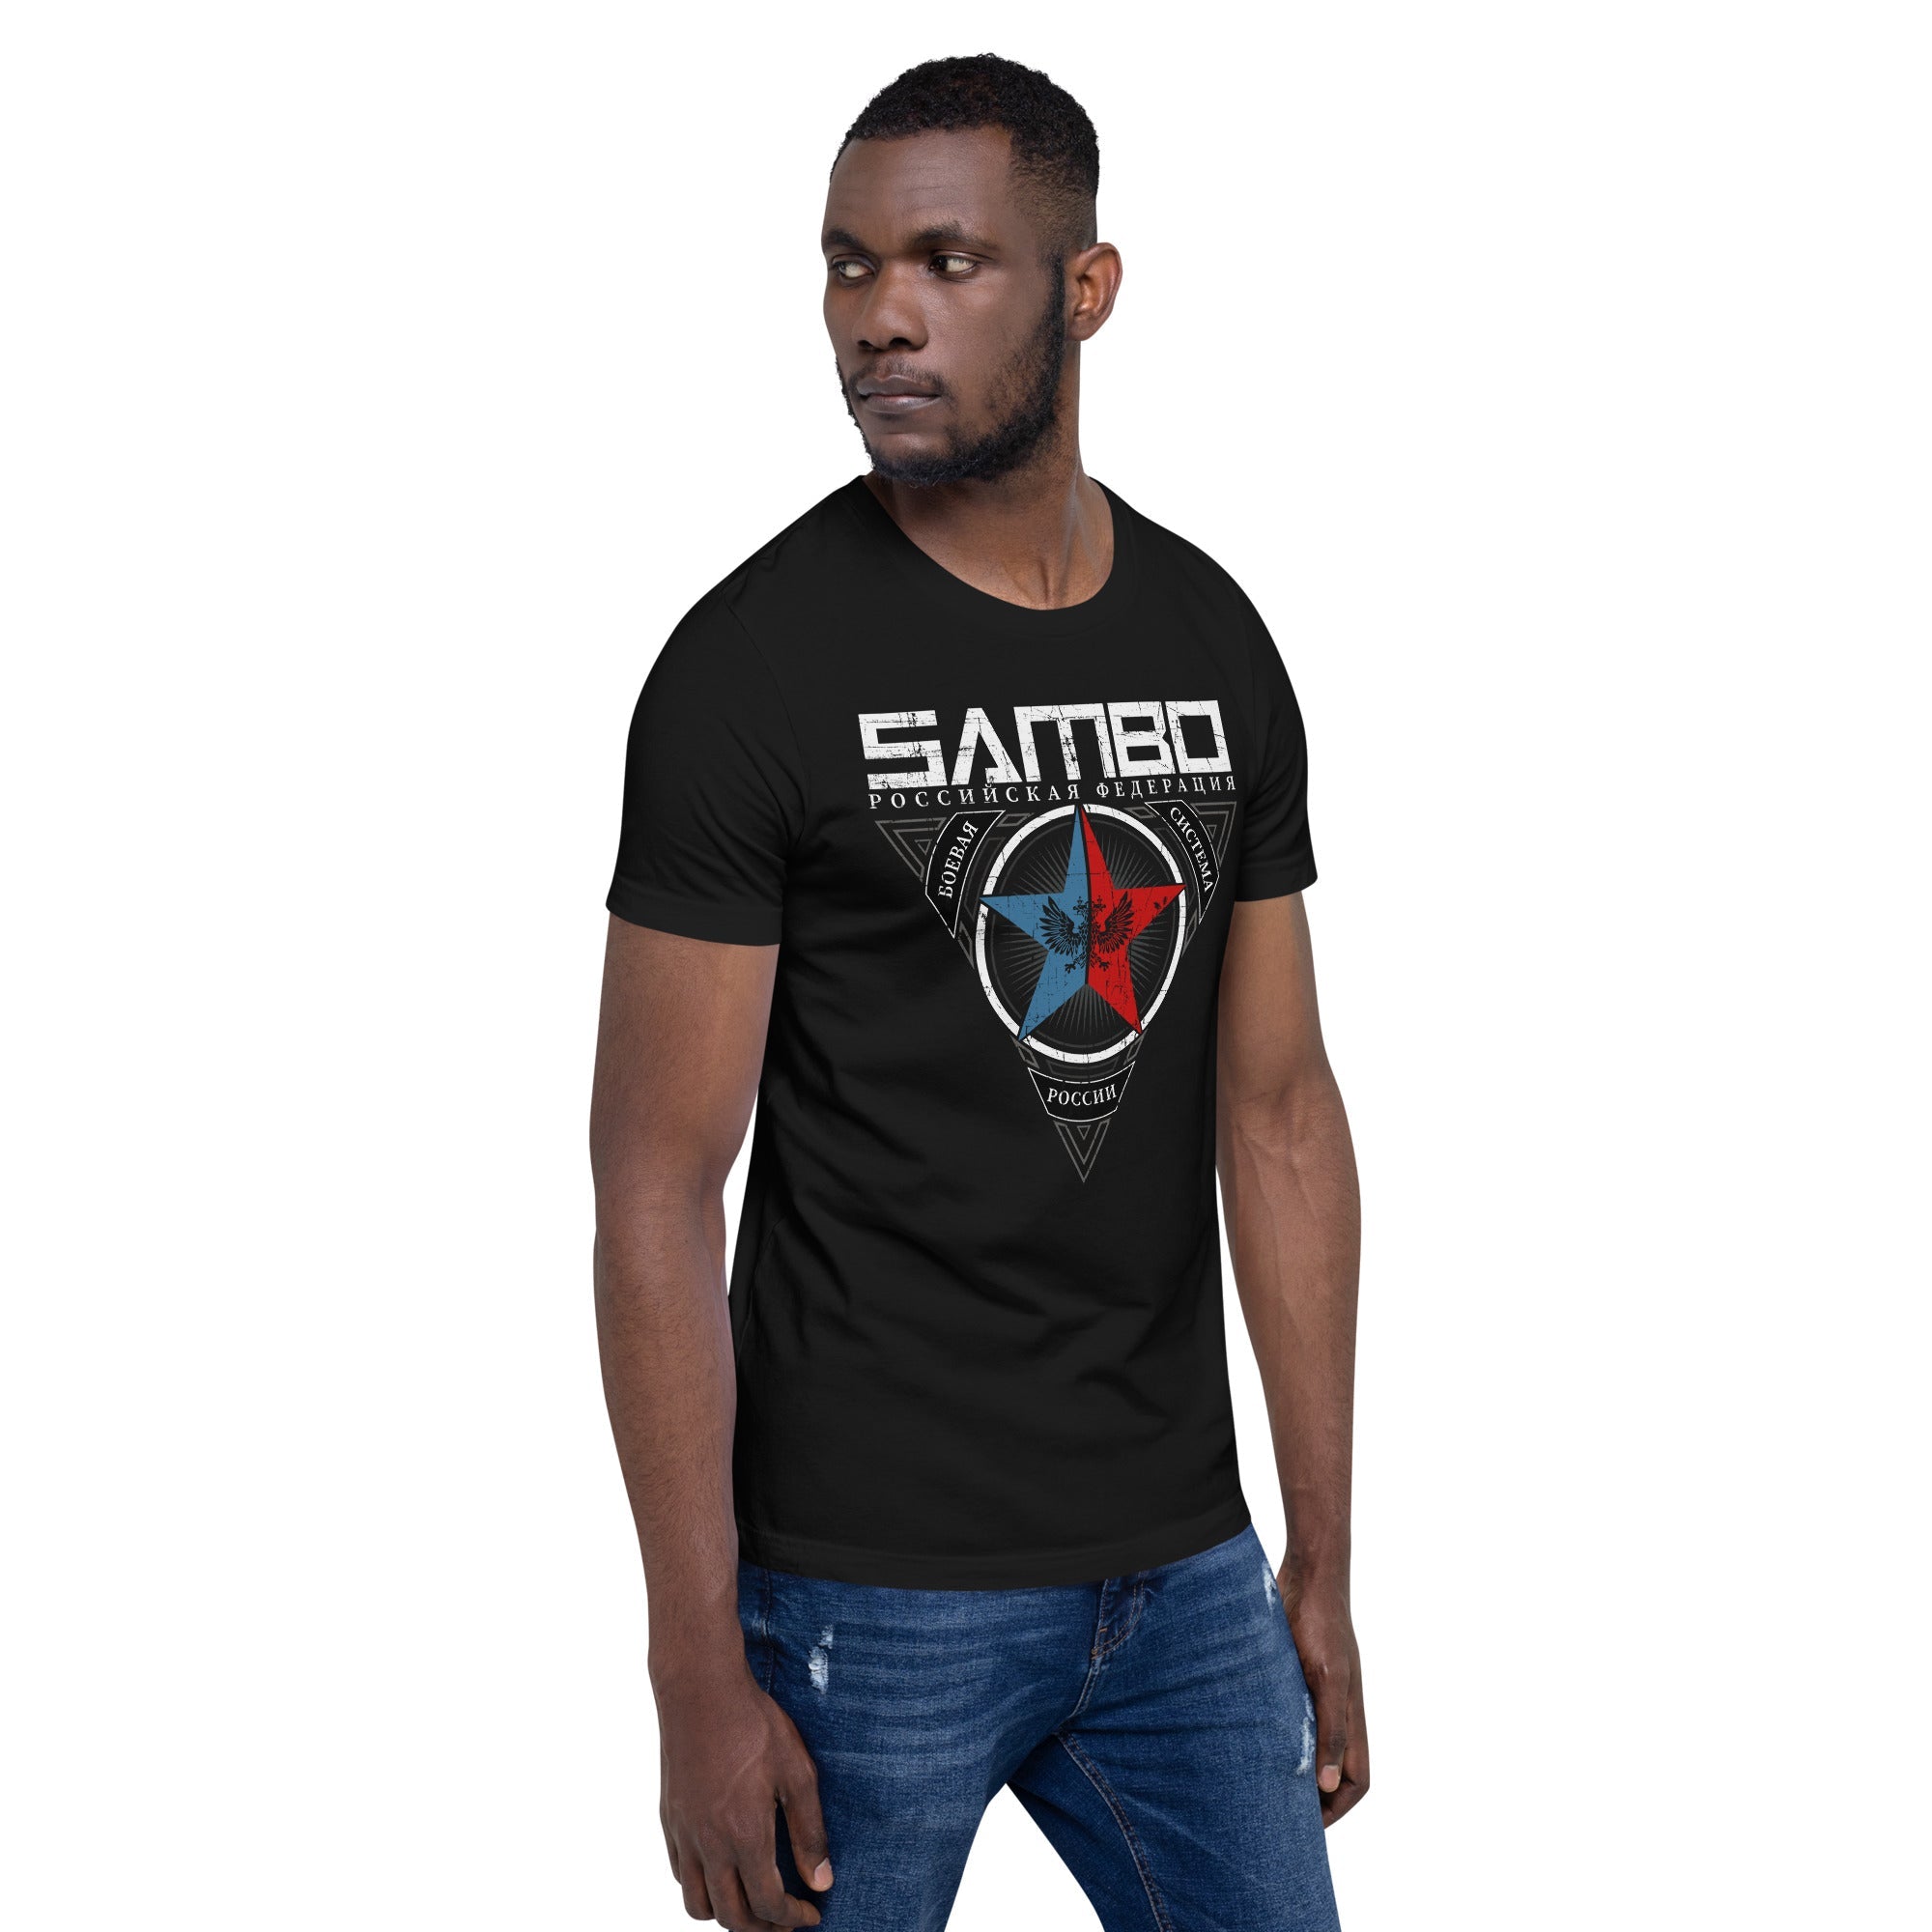 Sambo Russian Wrestling Unisex t-shirt mod.02